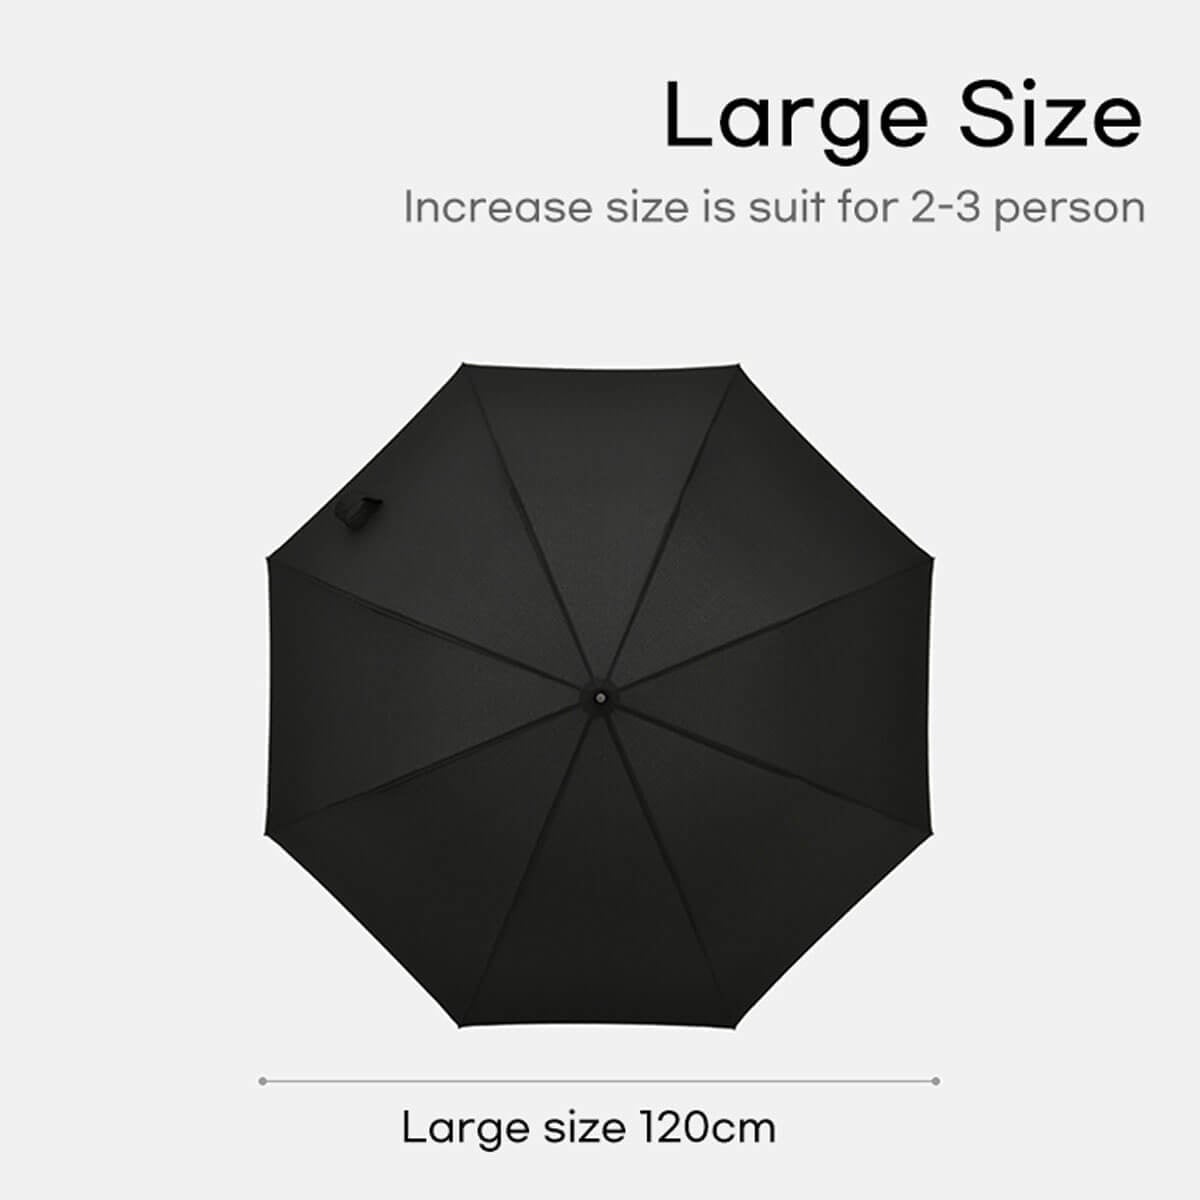 Wooden Semi-Automatic Large Umbrella